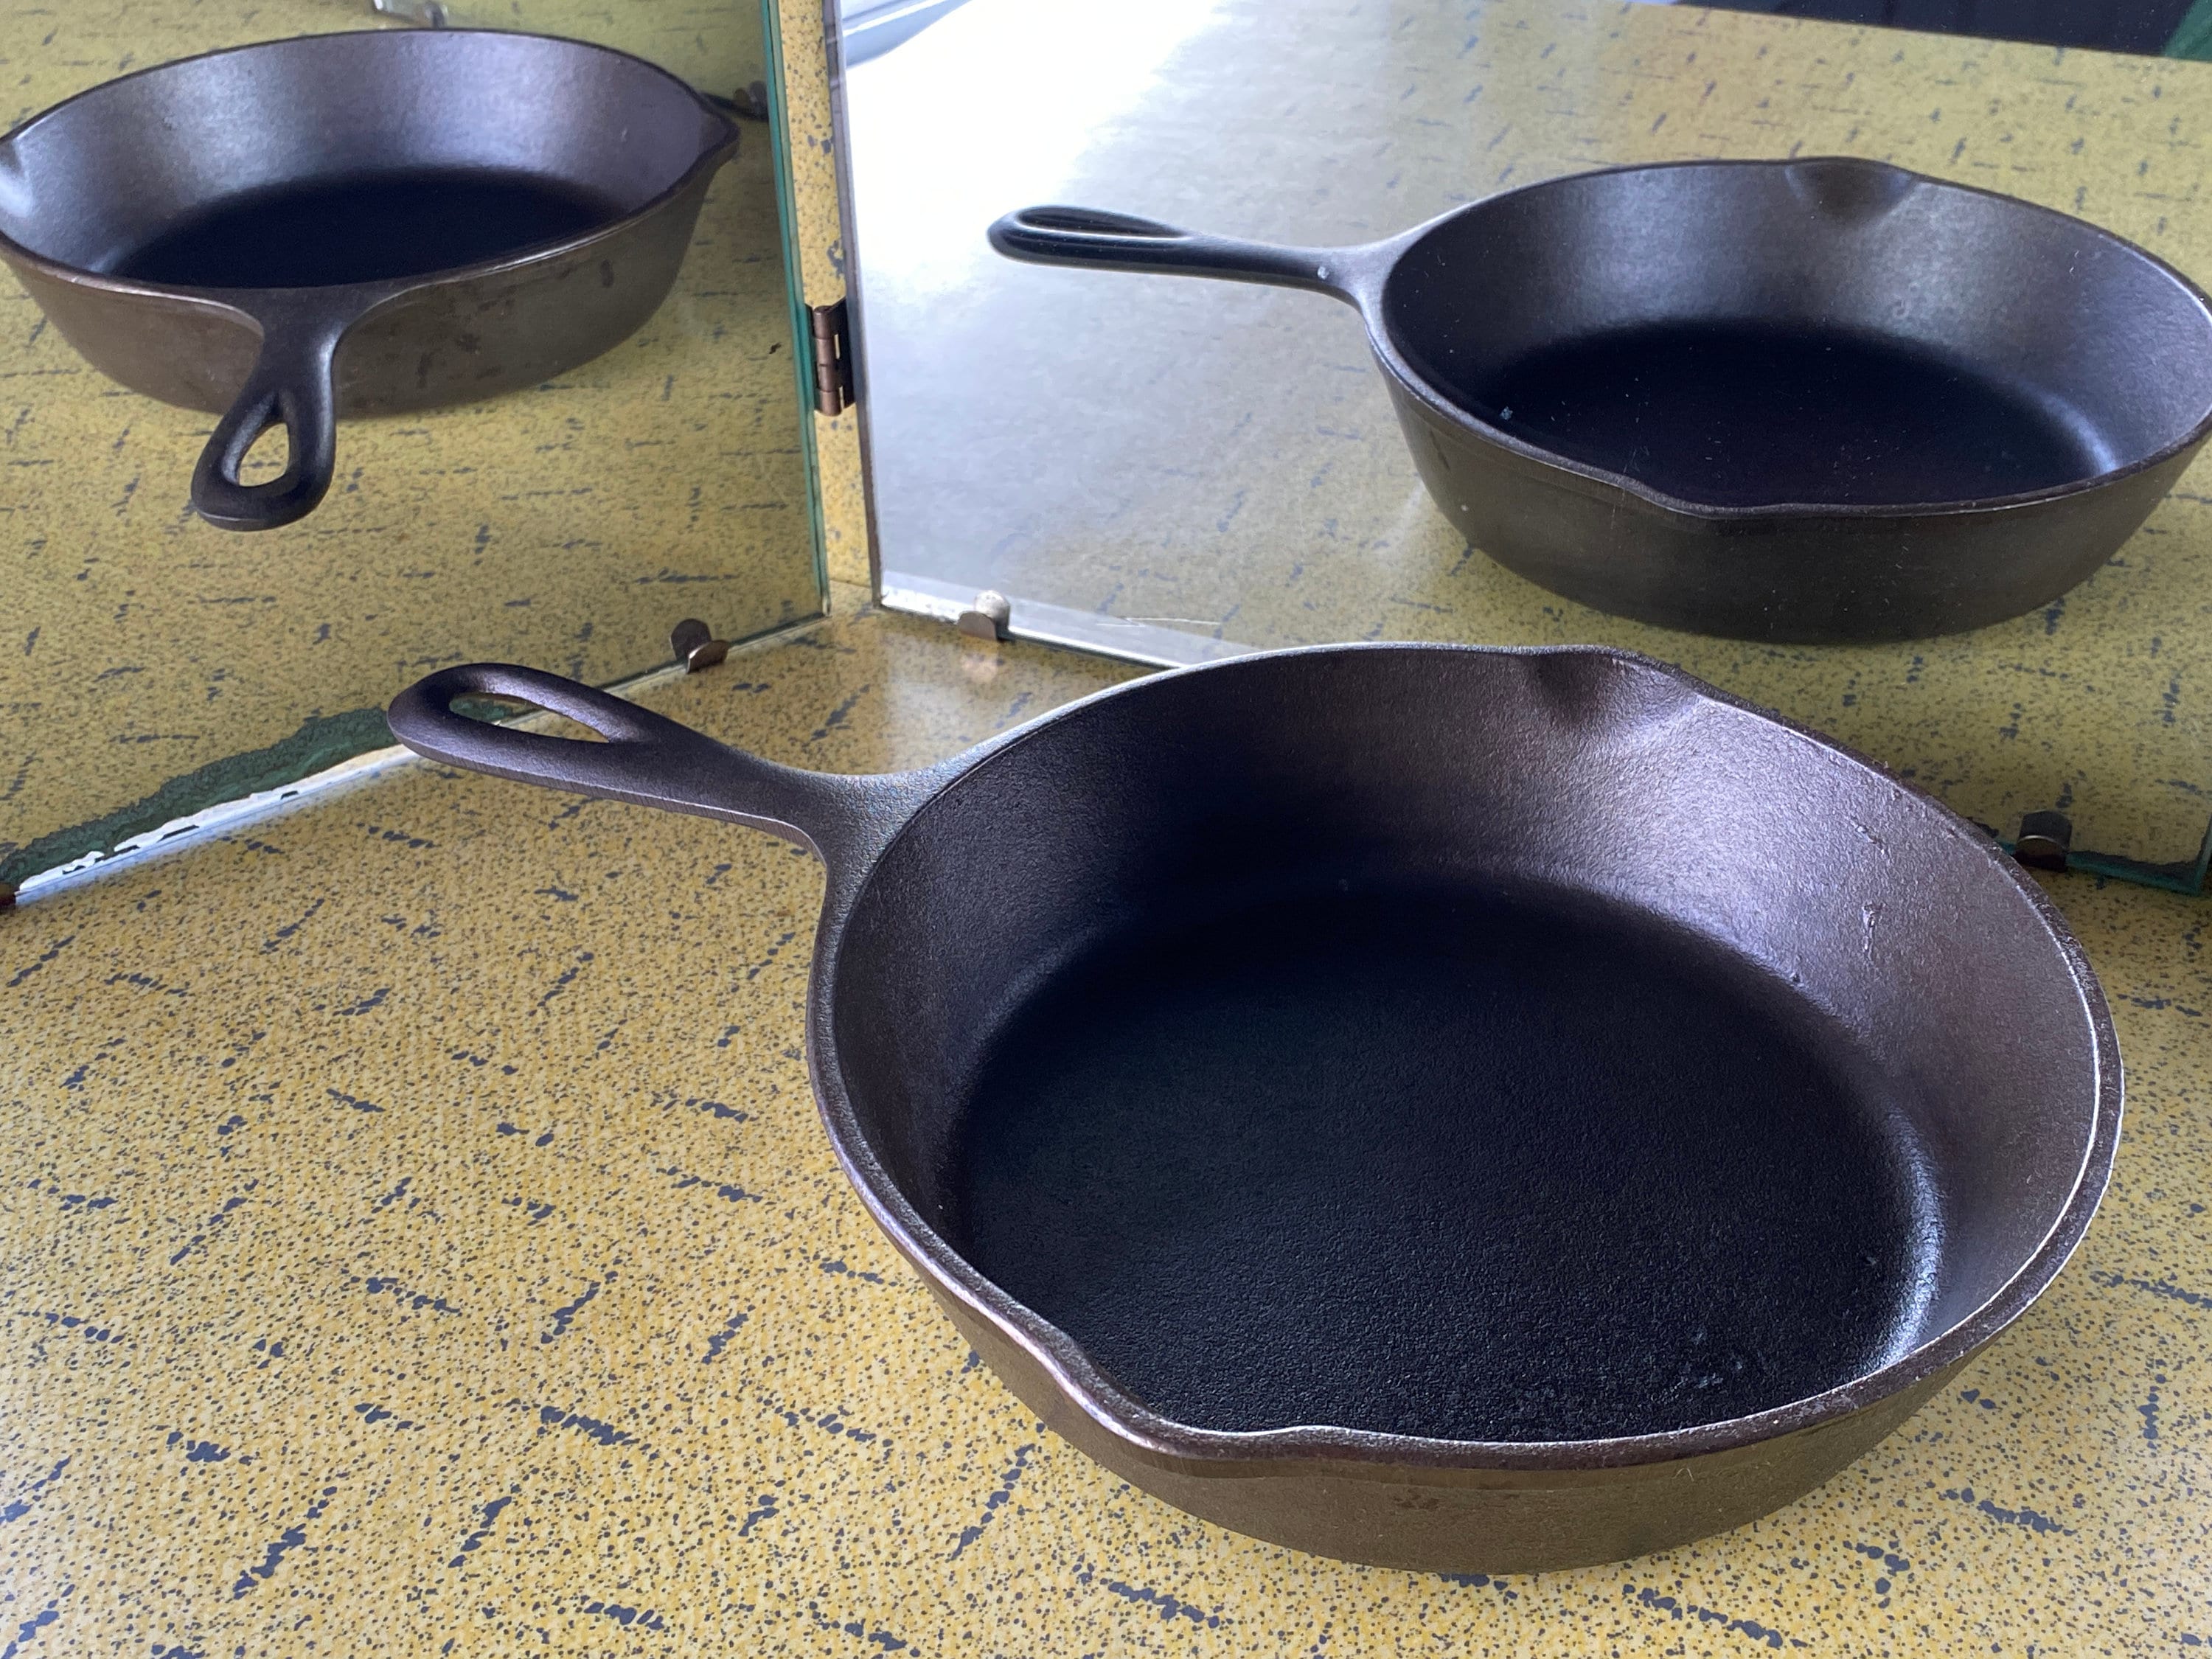 Lodge Classic Cast Iron frying pan L5SK3, 20 cm